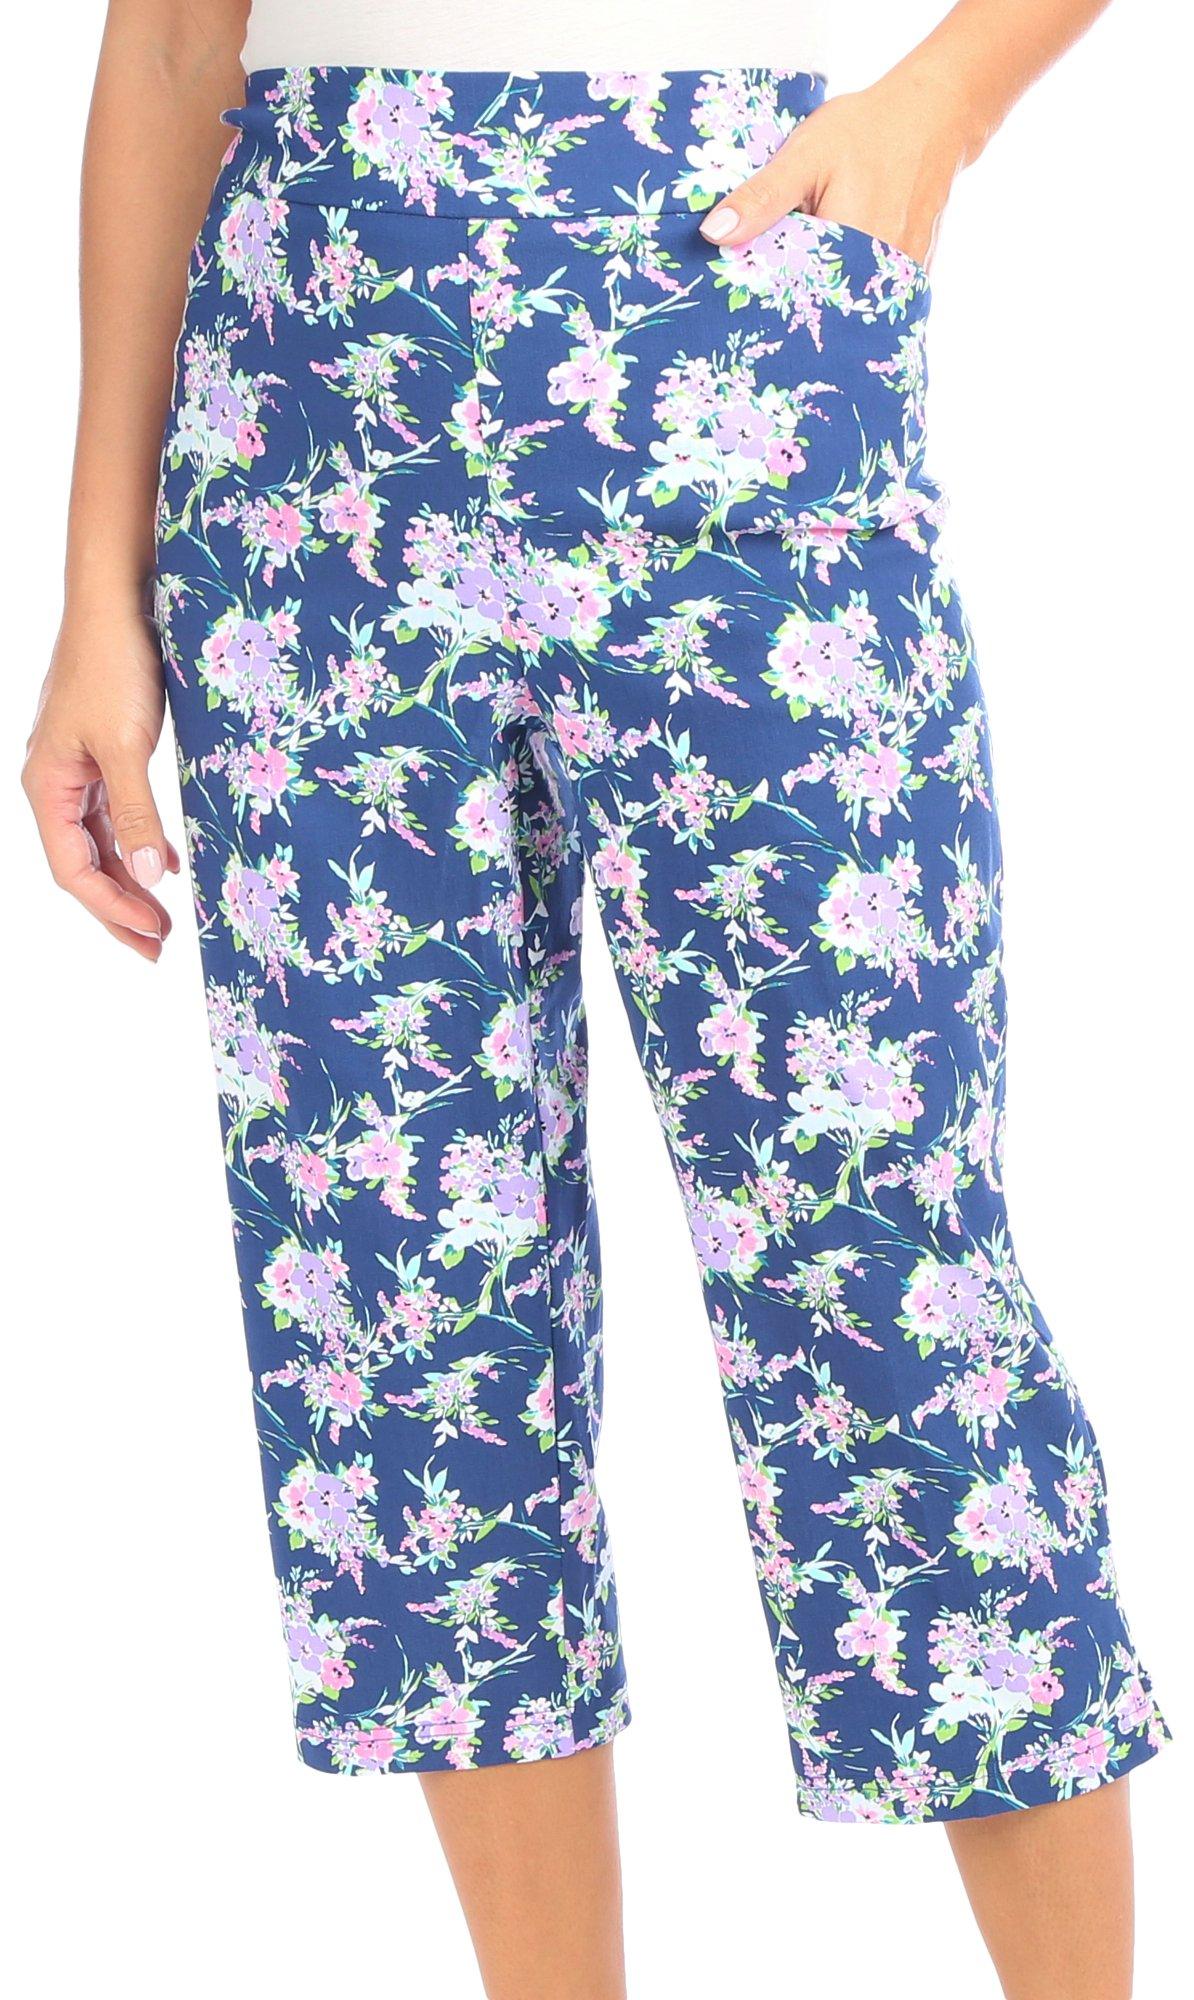 WOMENS BLUE & WHITE FLORAL CAPRI PANTS SIZE 10 - clothing & accessories -  by owner - apparel sale - craigslist